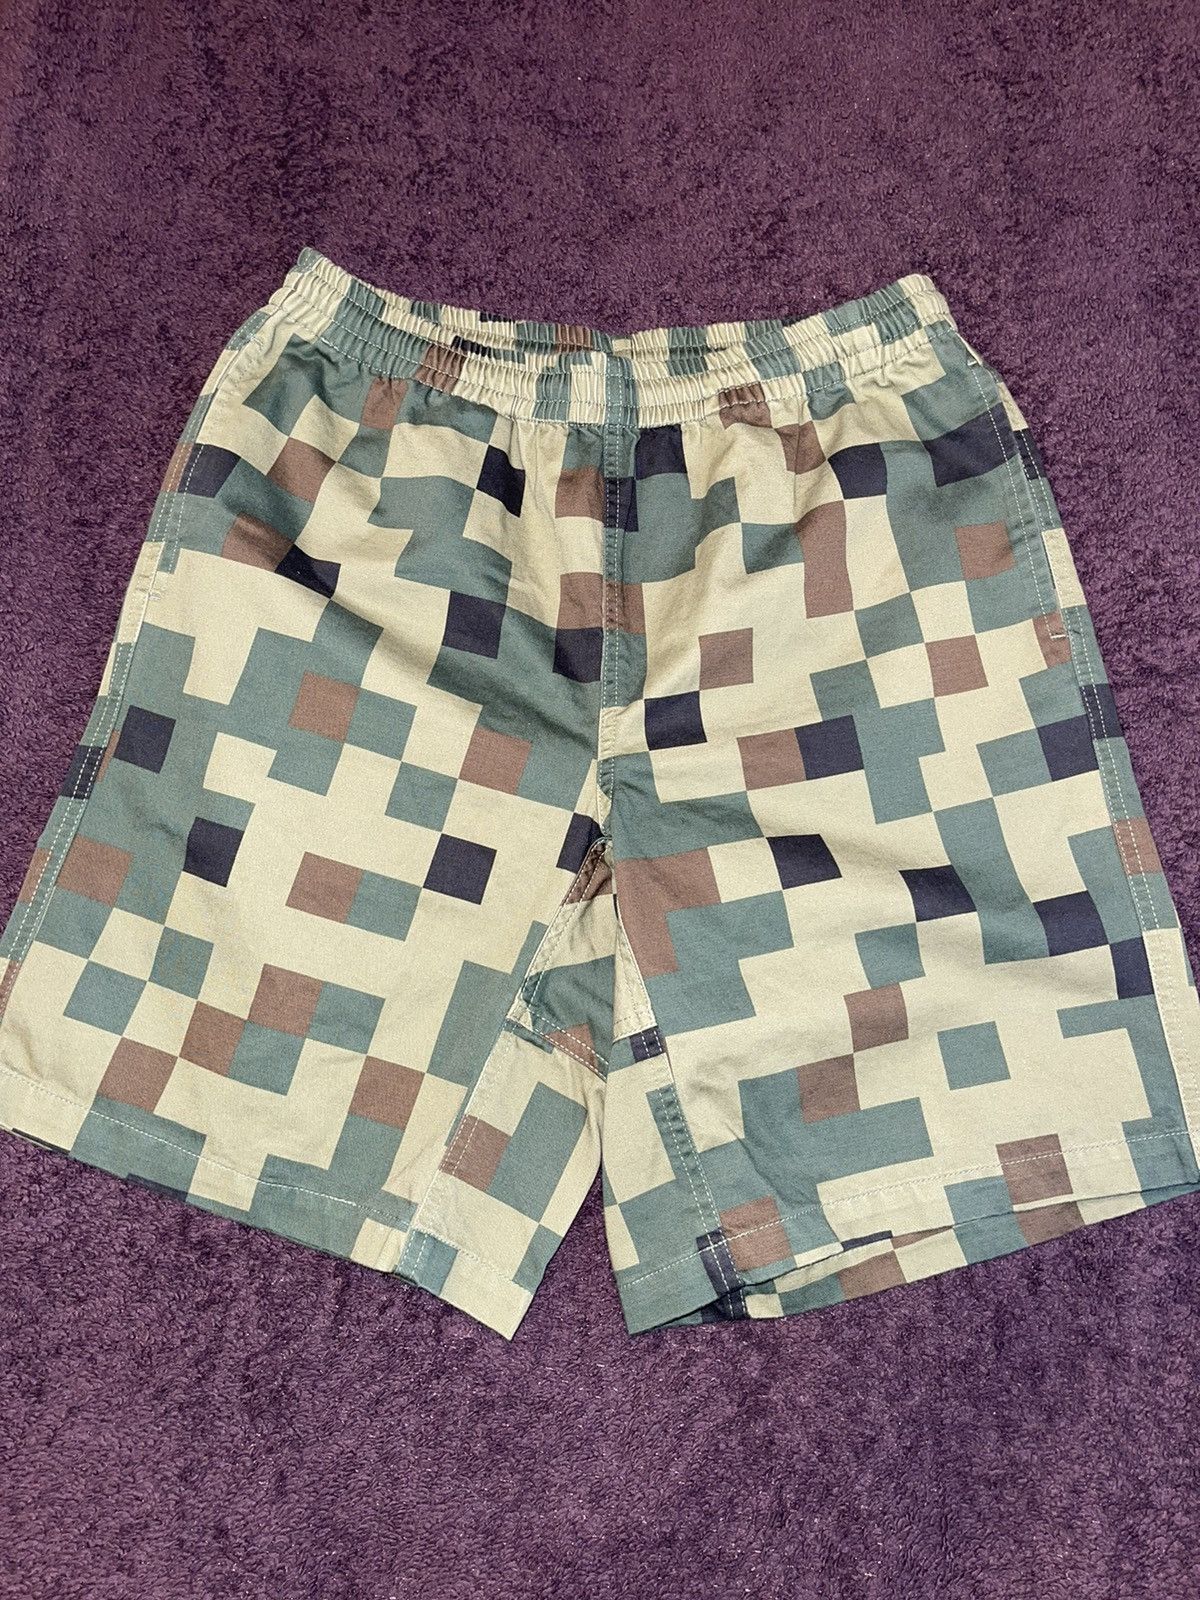 Supreme Military twill shorts | Grailed